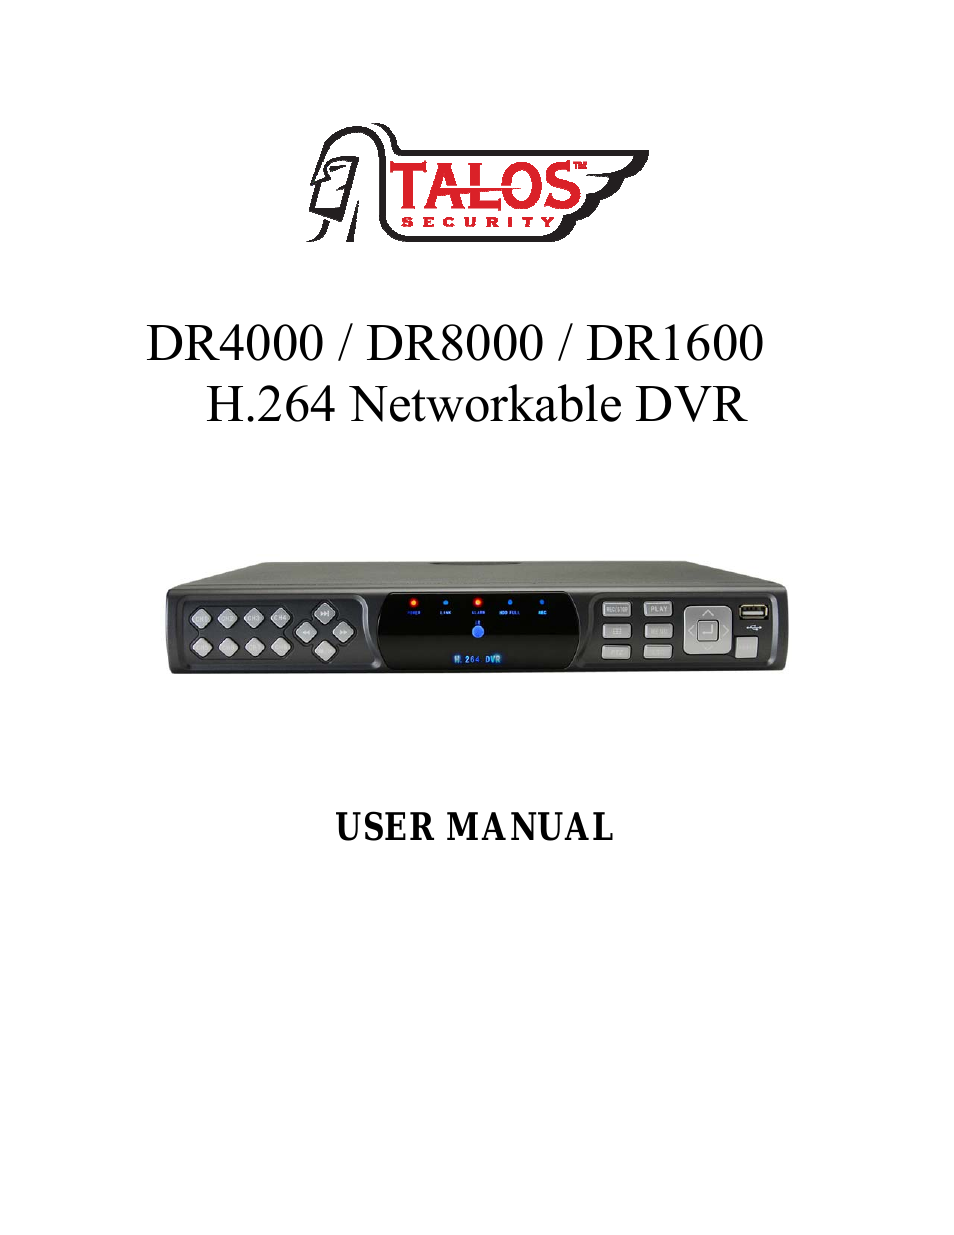 DR1600 Series DVR User Manual